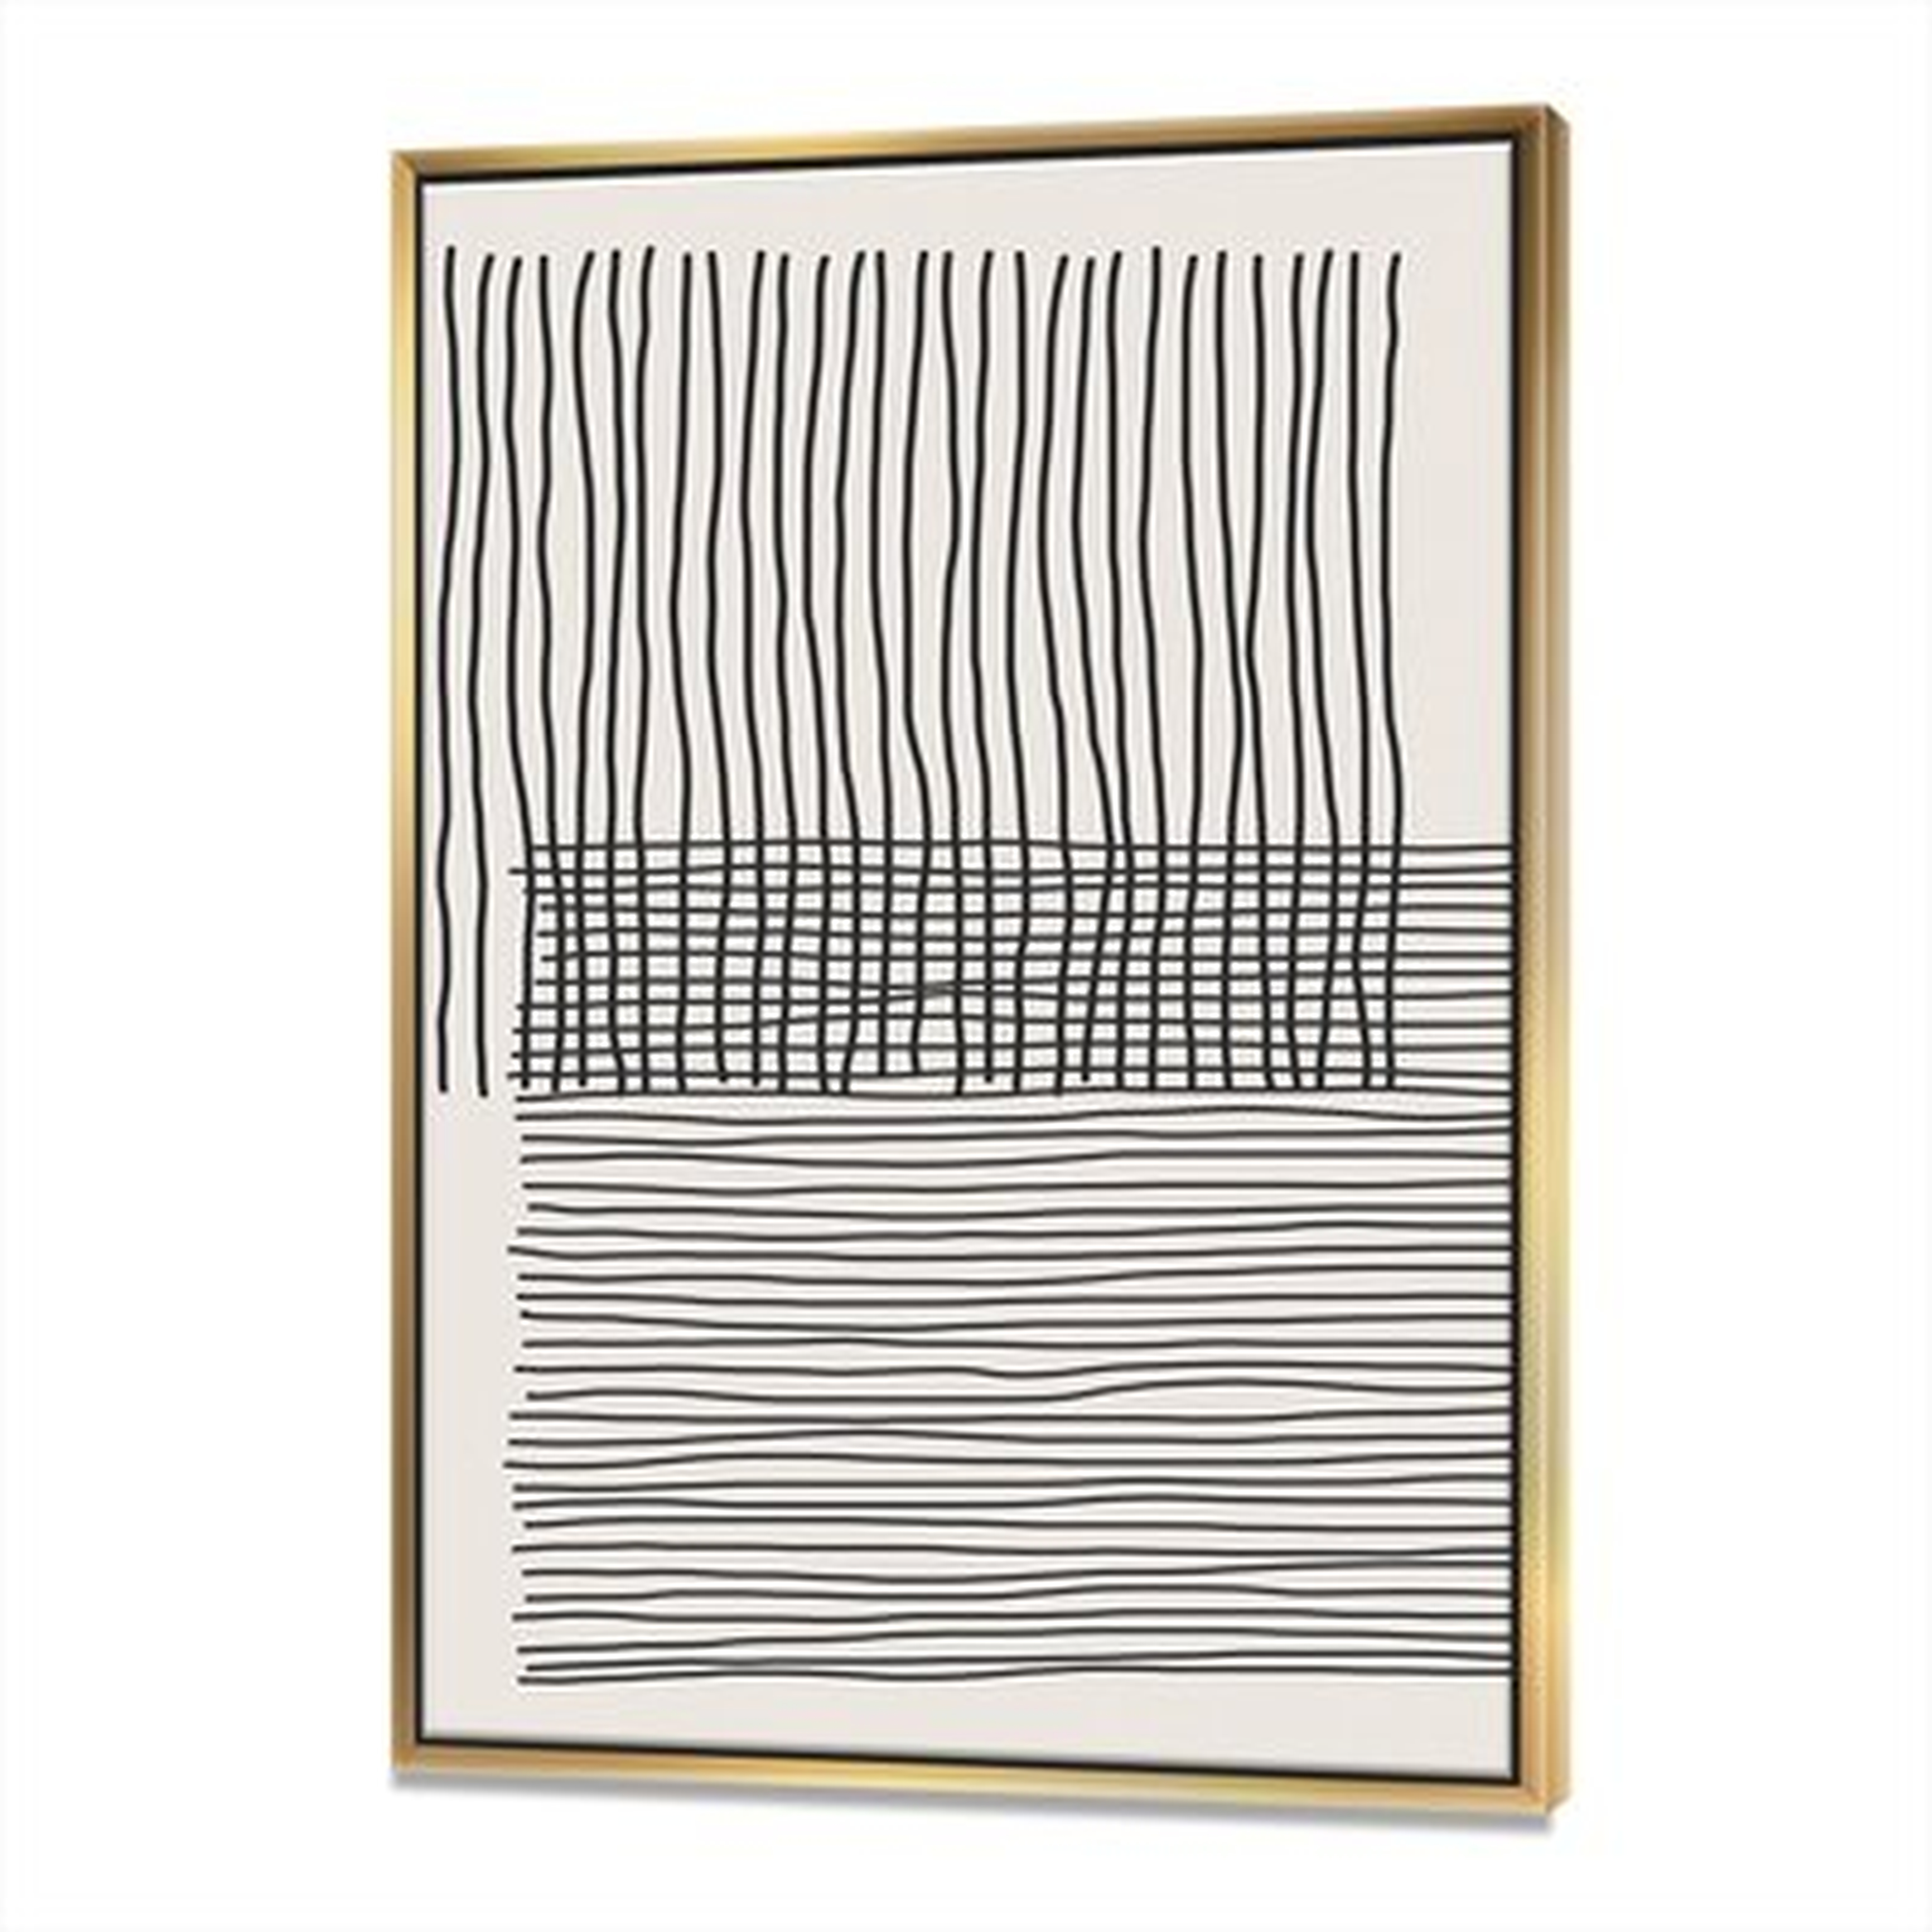 Minimal Geometric Lines and Squares II - Print on Canvas - Wayfair